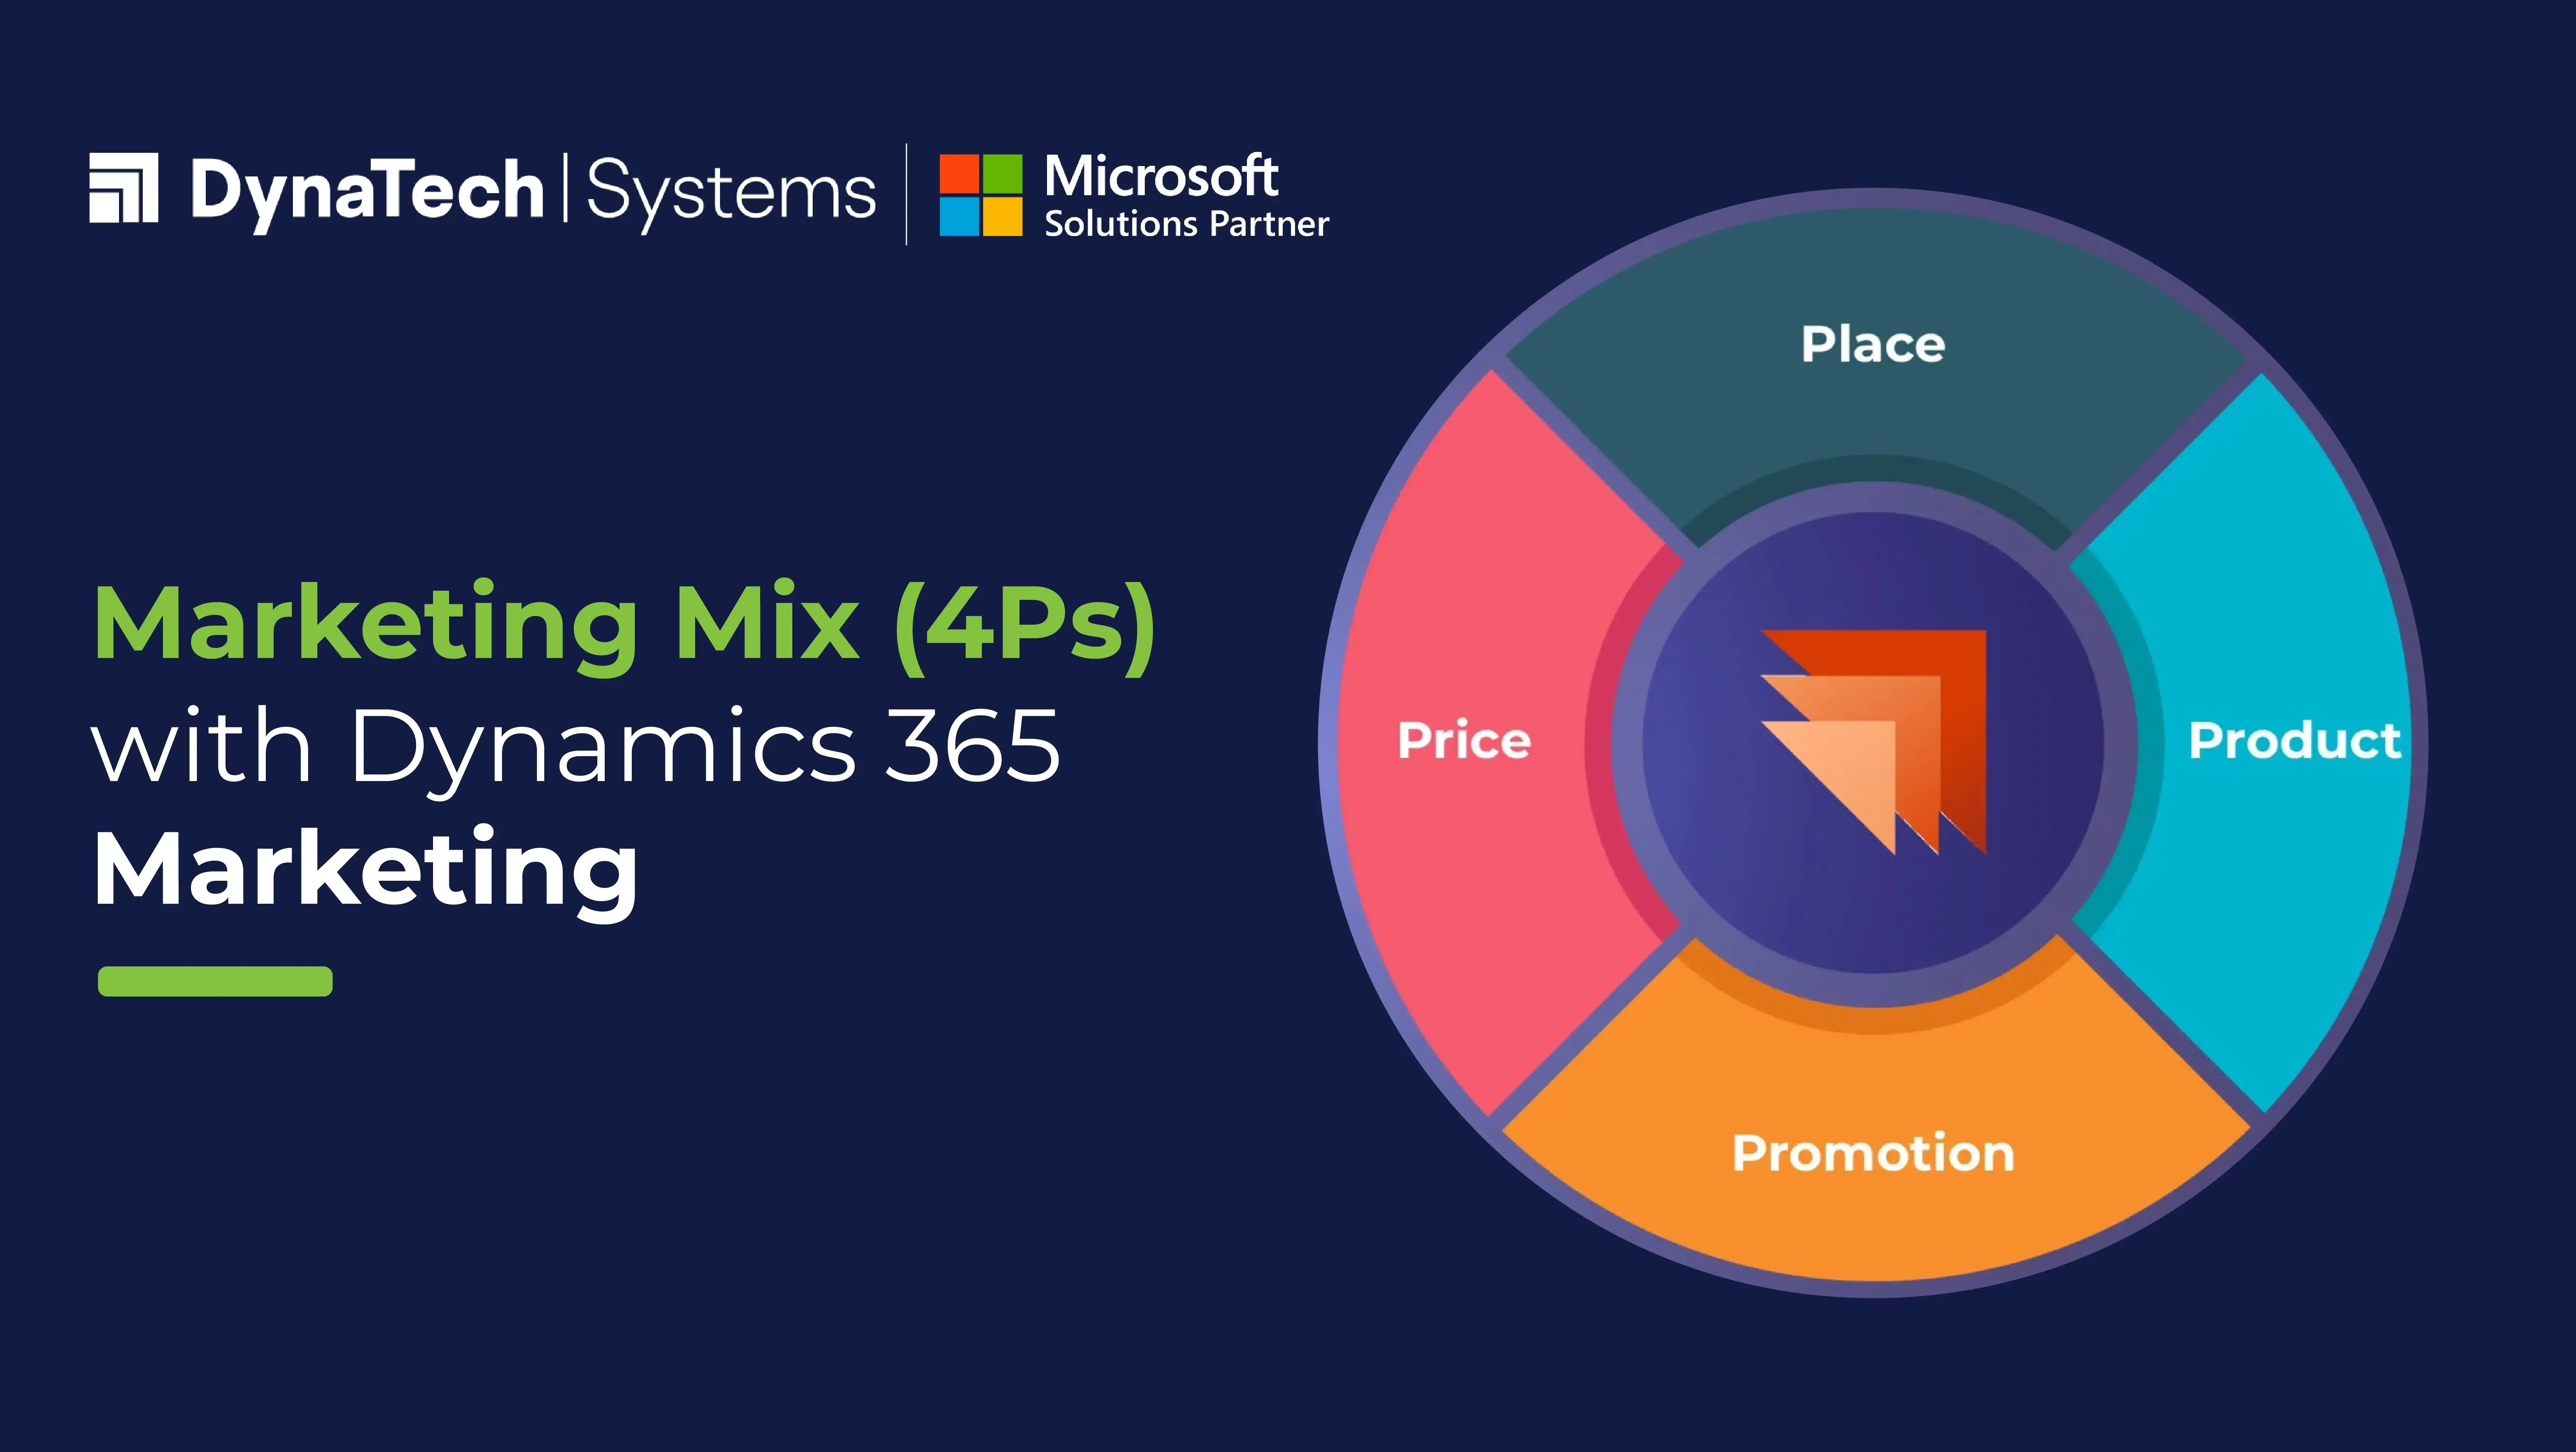 Marketing Mix (4Ps) with Dynamics 365 Marketing